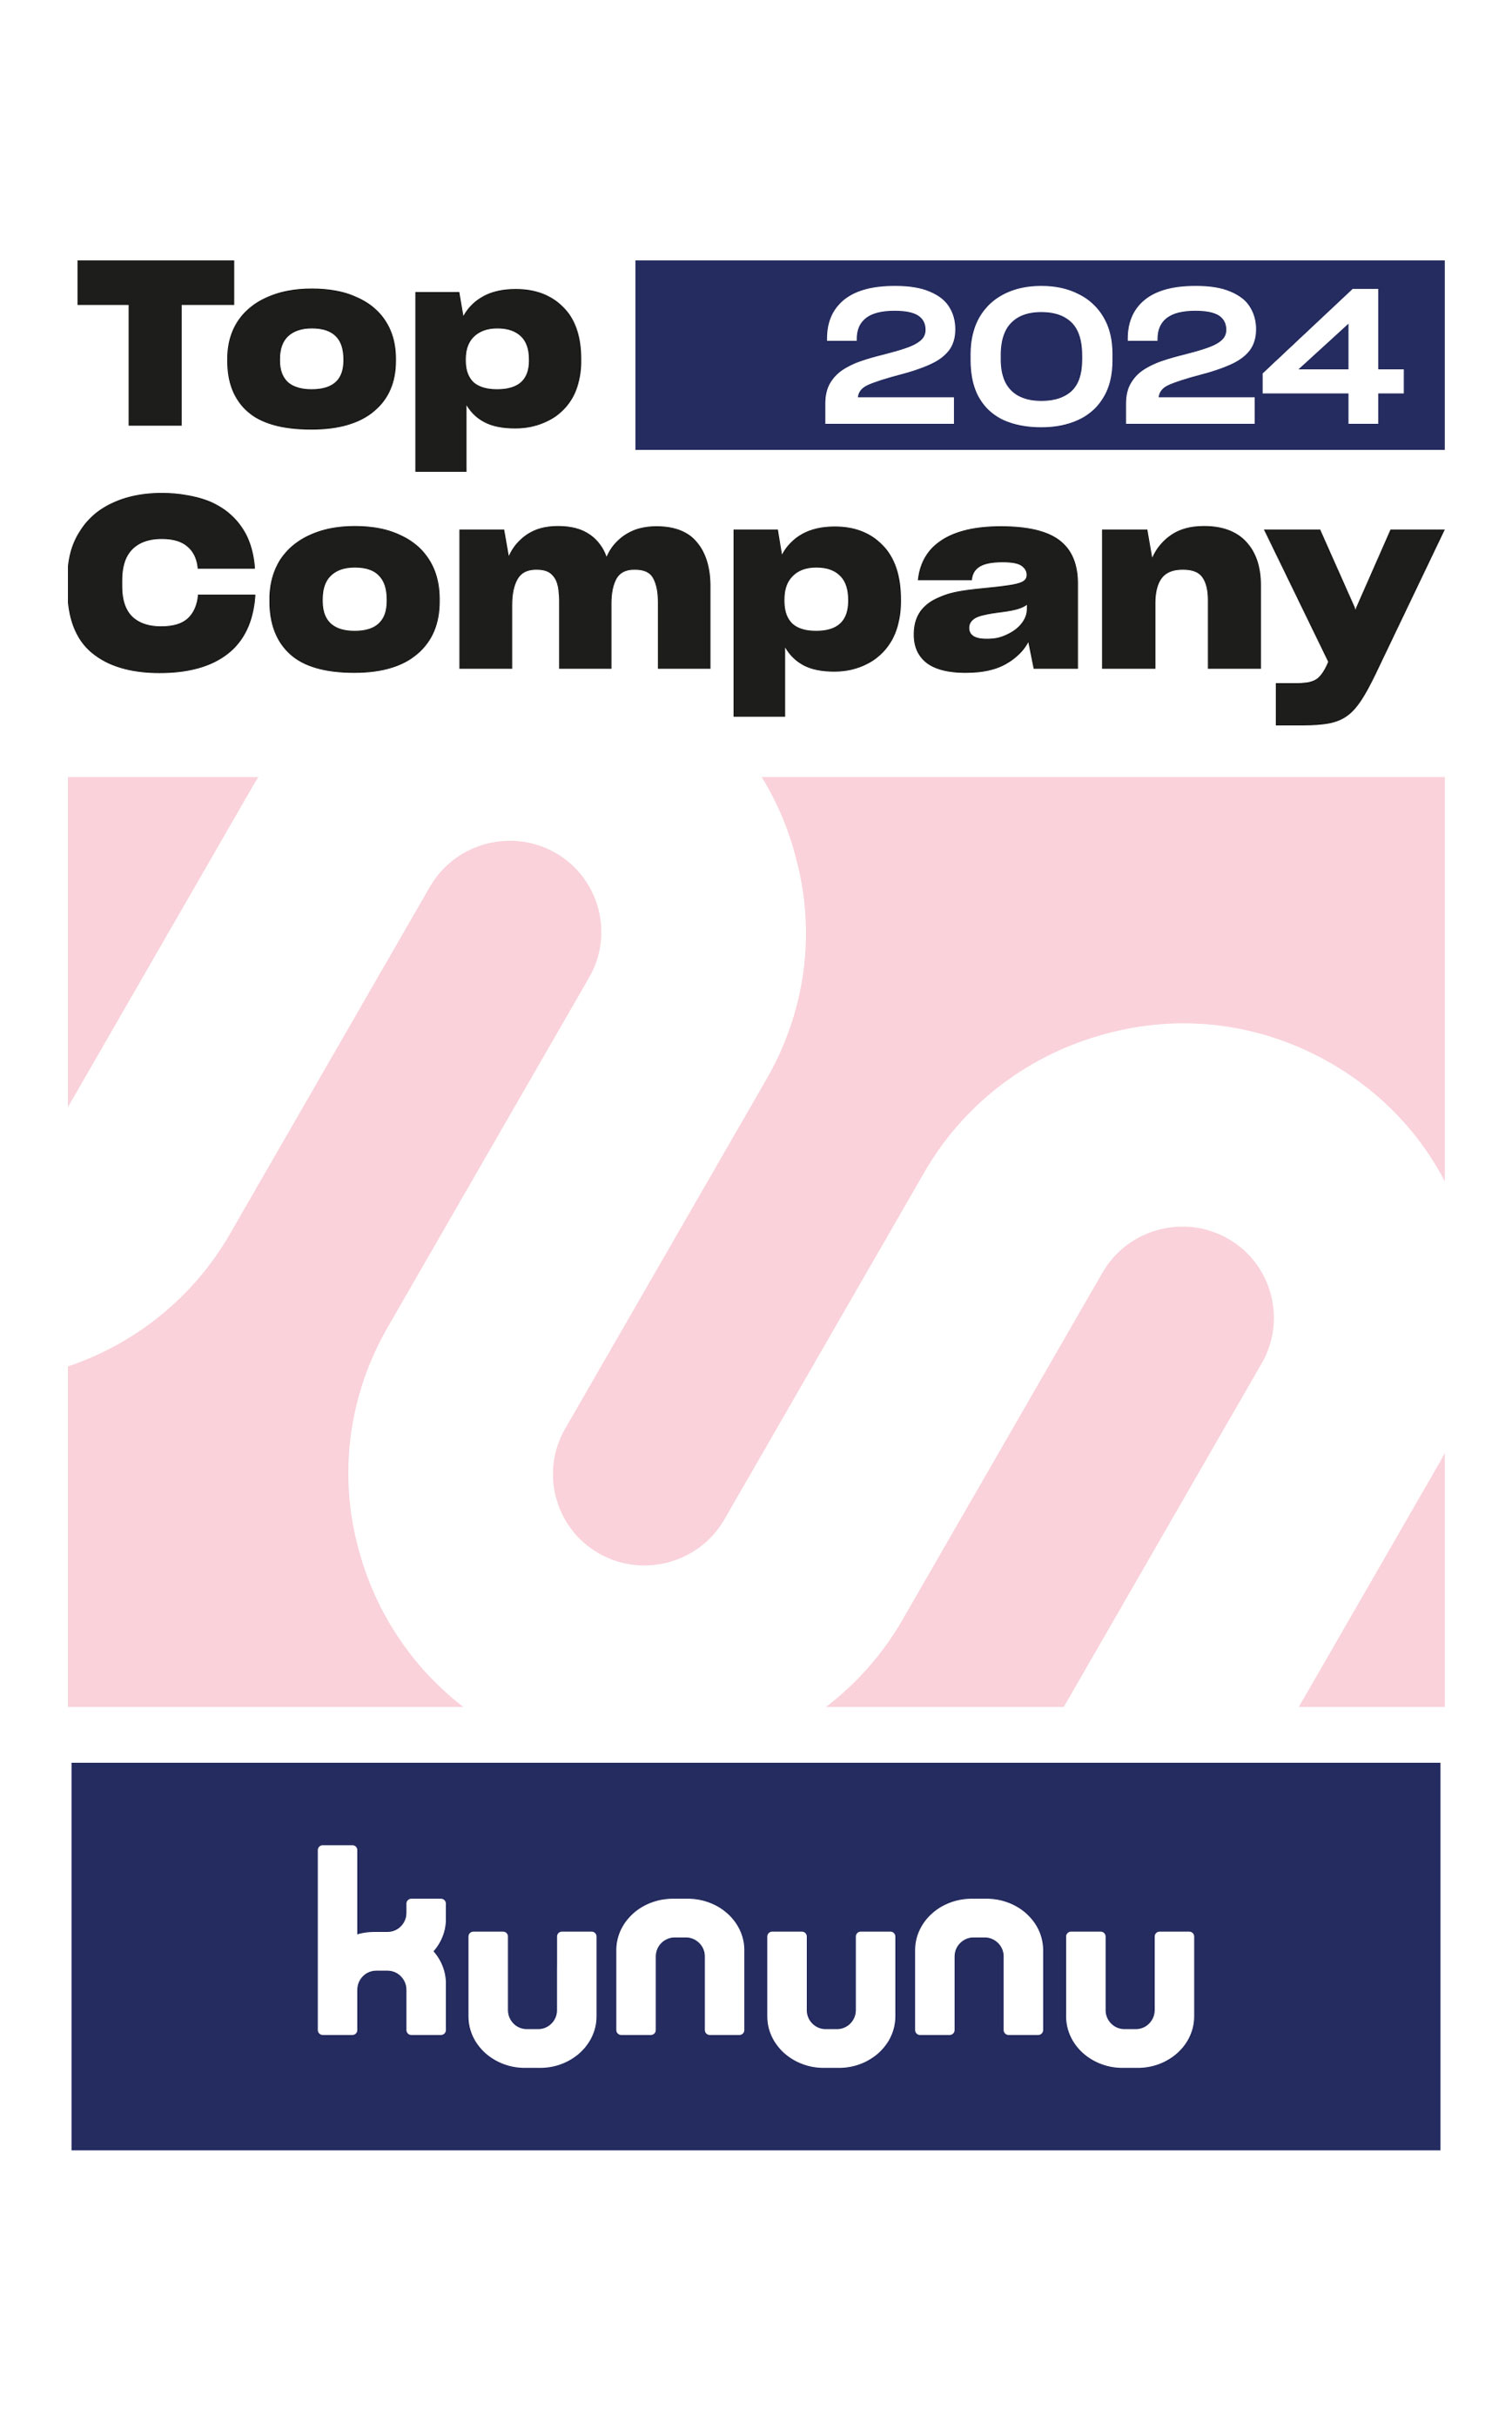 kununu - Top Company 2024